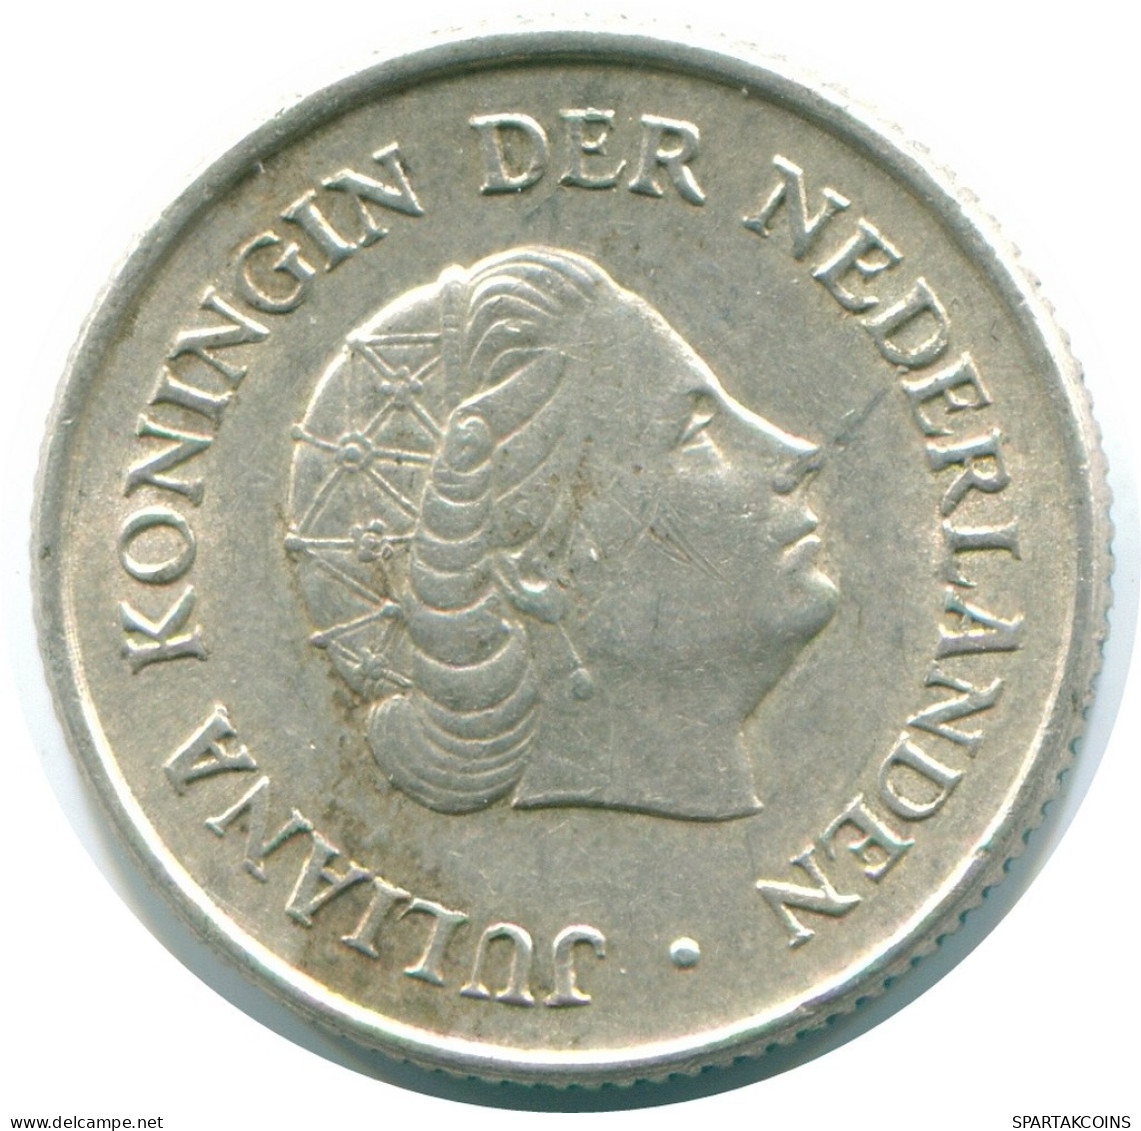 1/4 GULDEN 1970 NETHERLANDS ANTILLES SILVER Colonial Coin #NL11666.4.U.A - Netherlands Antilles